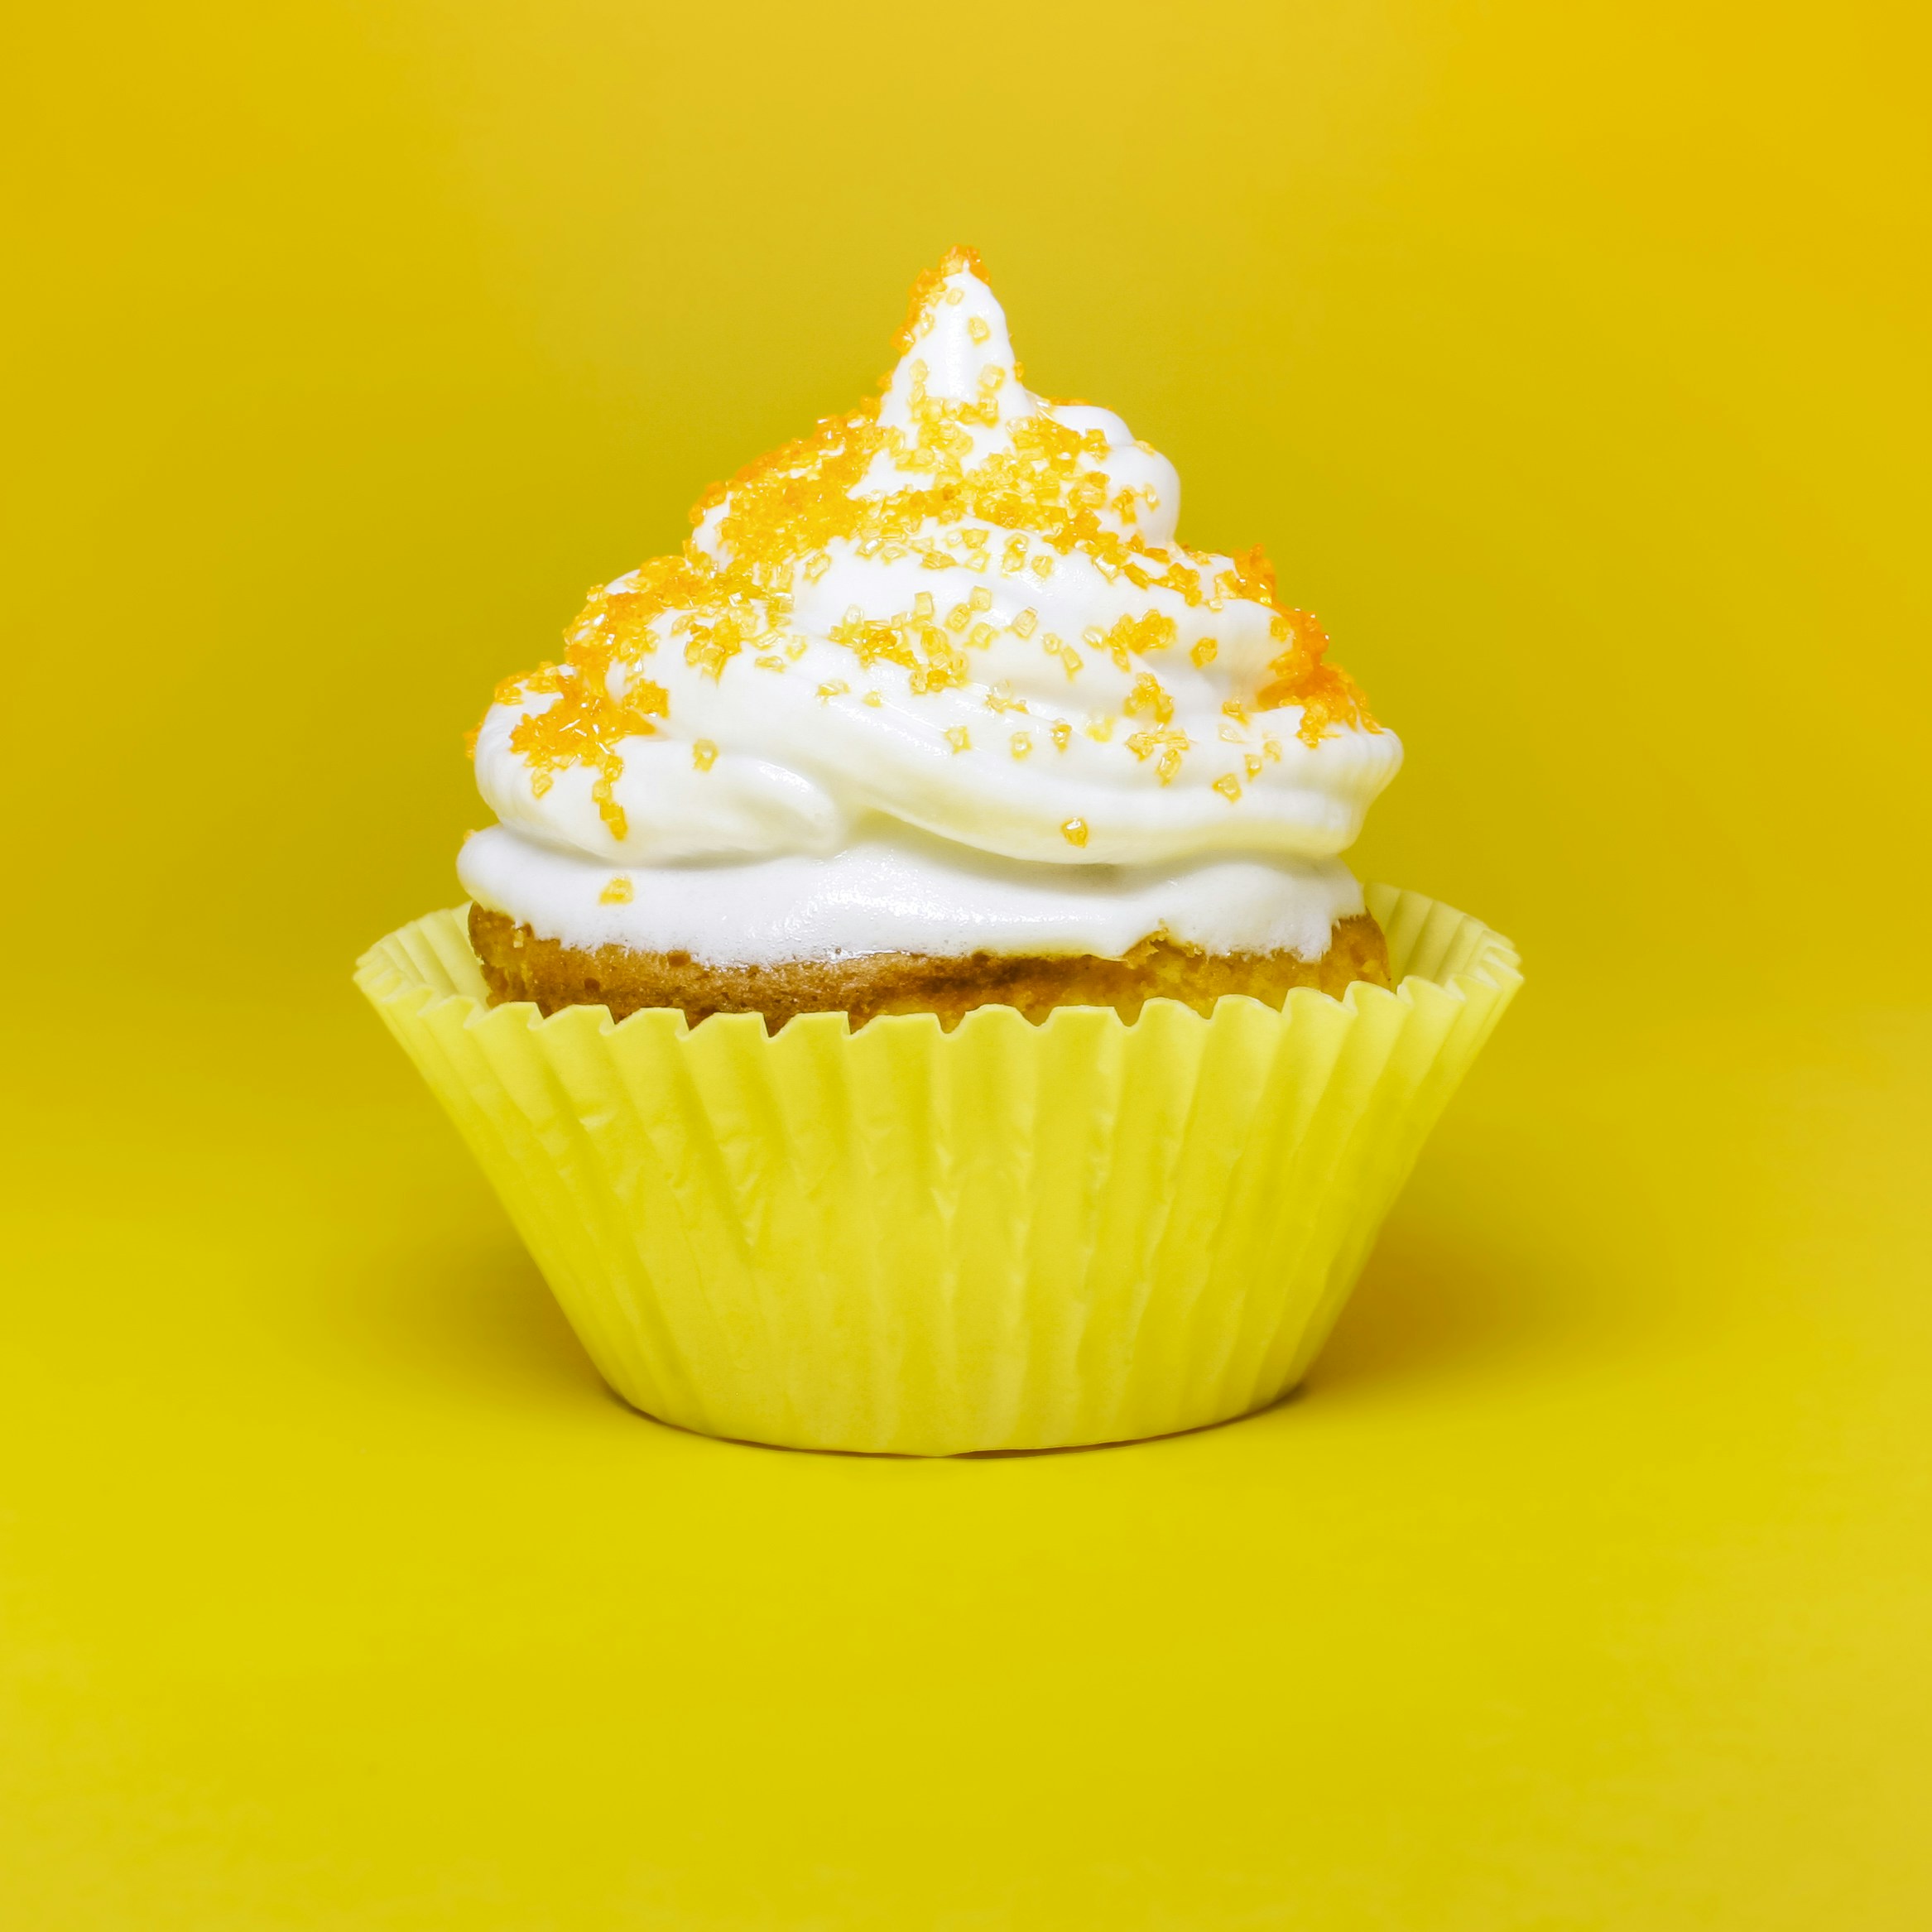 sweet treat. cupcake on yellow background